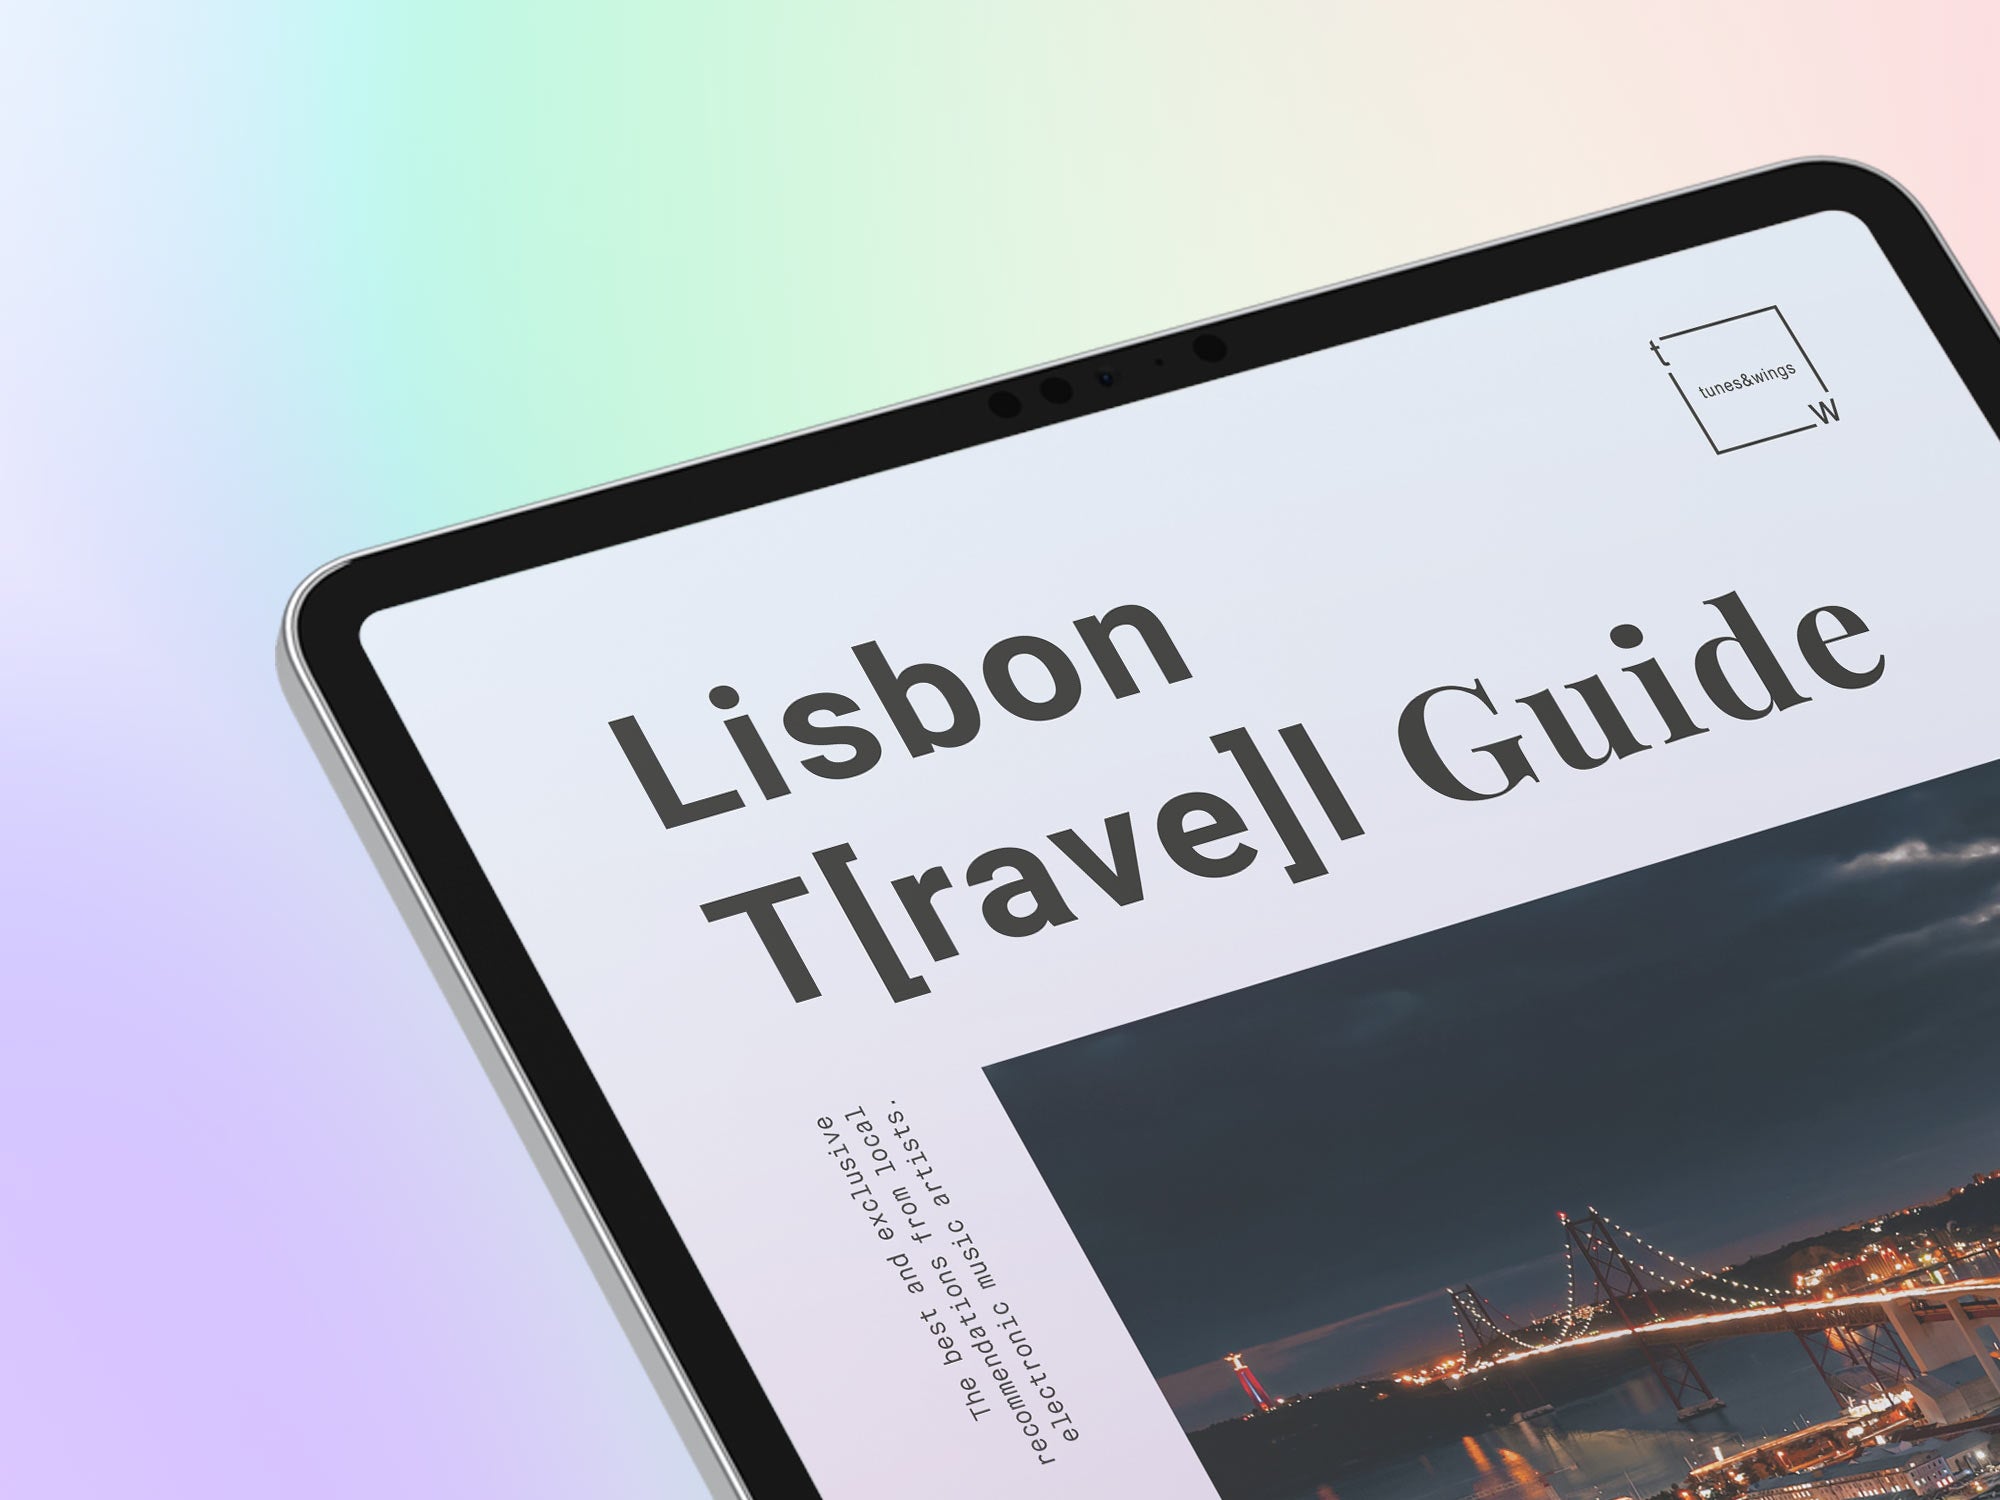 Lisbon T[rave]l Guide – digital